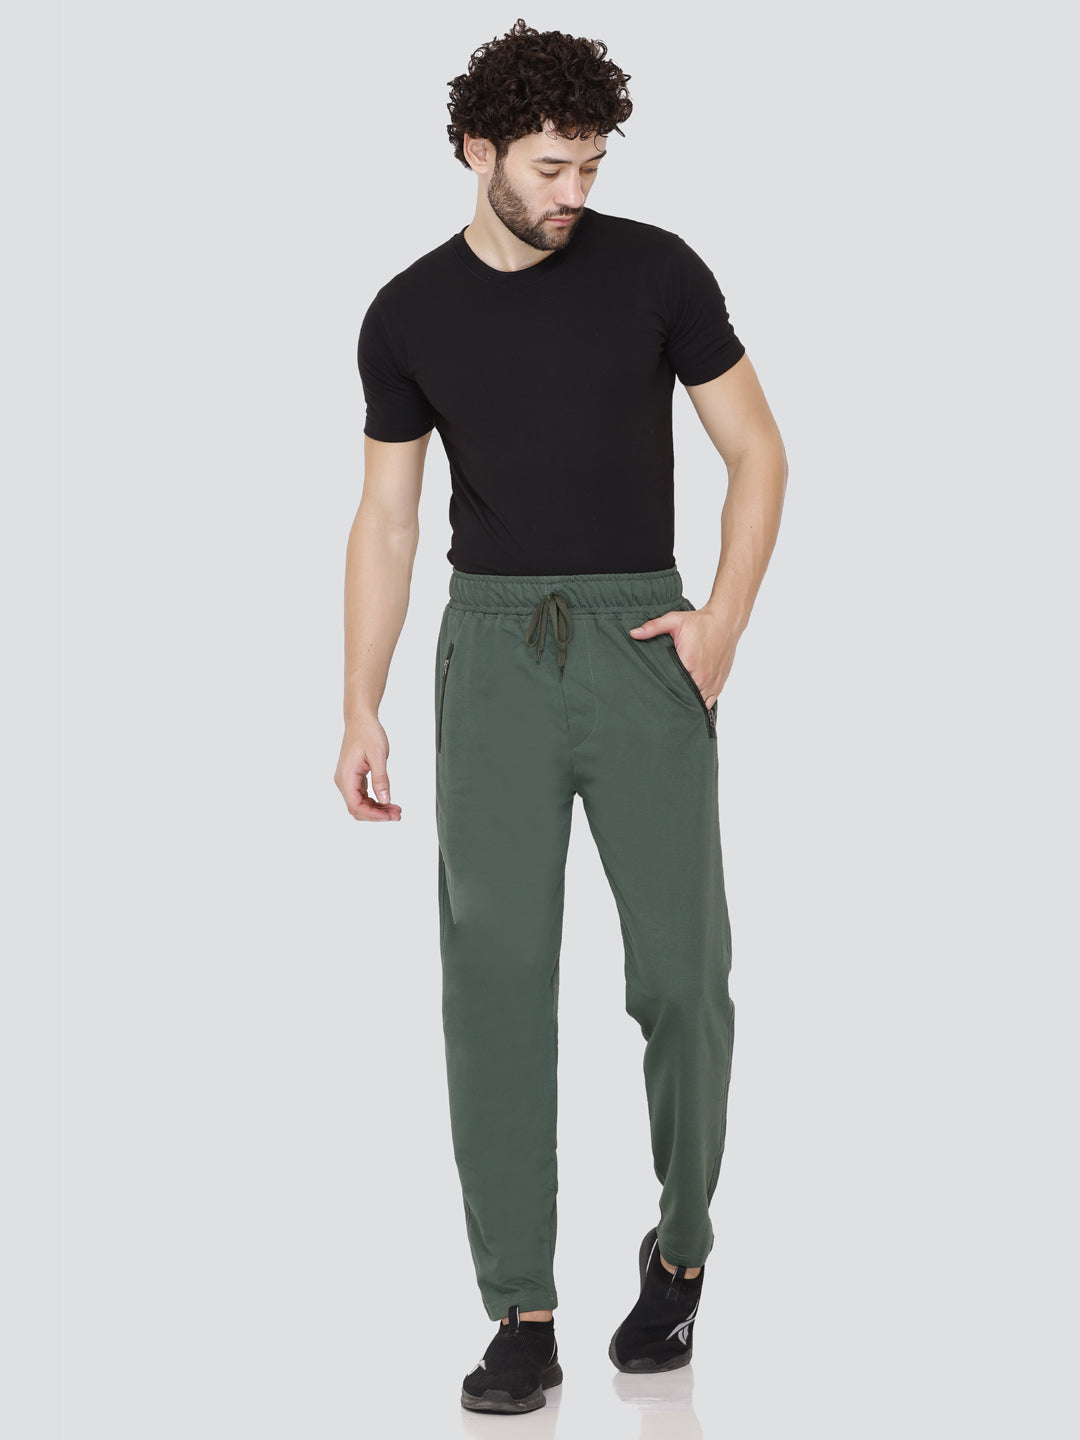 Jinxer Men Plus Size Plain Cotton Track Pants -combo Pack Of 2 at Rs 995 |  Millar Ganj | Ludhiana| ID: 25562535830